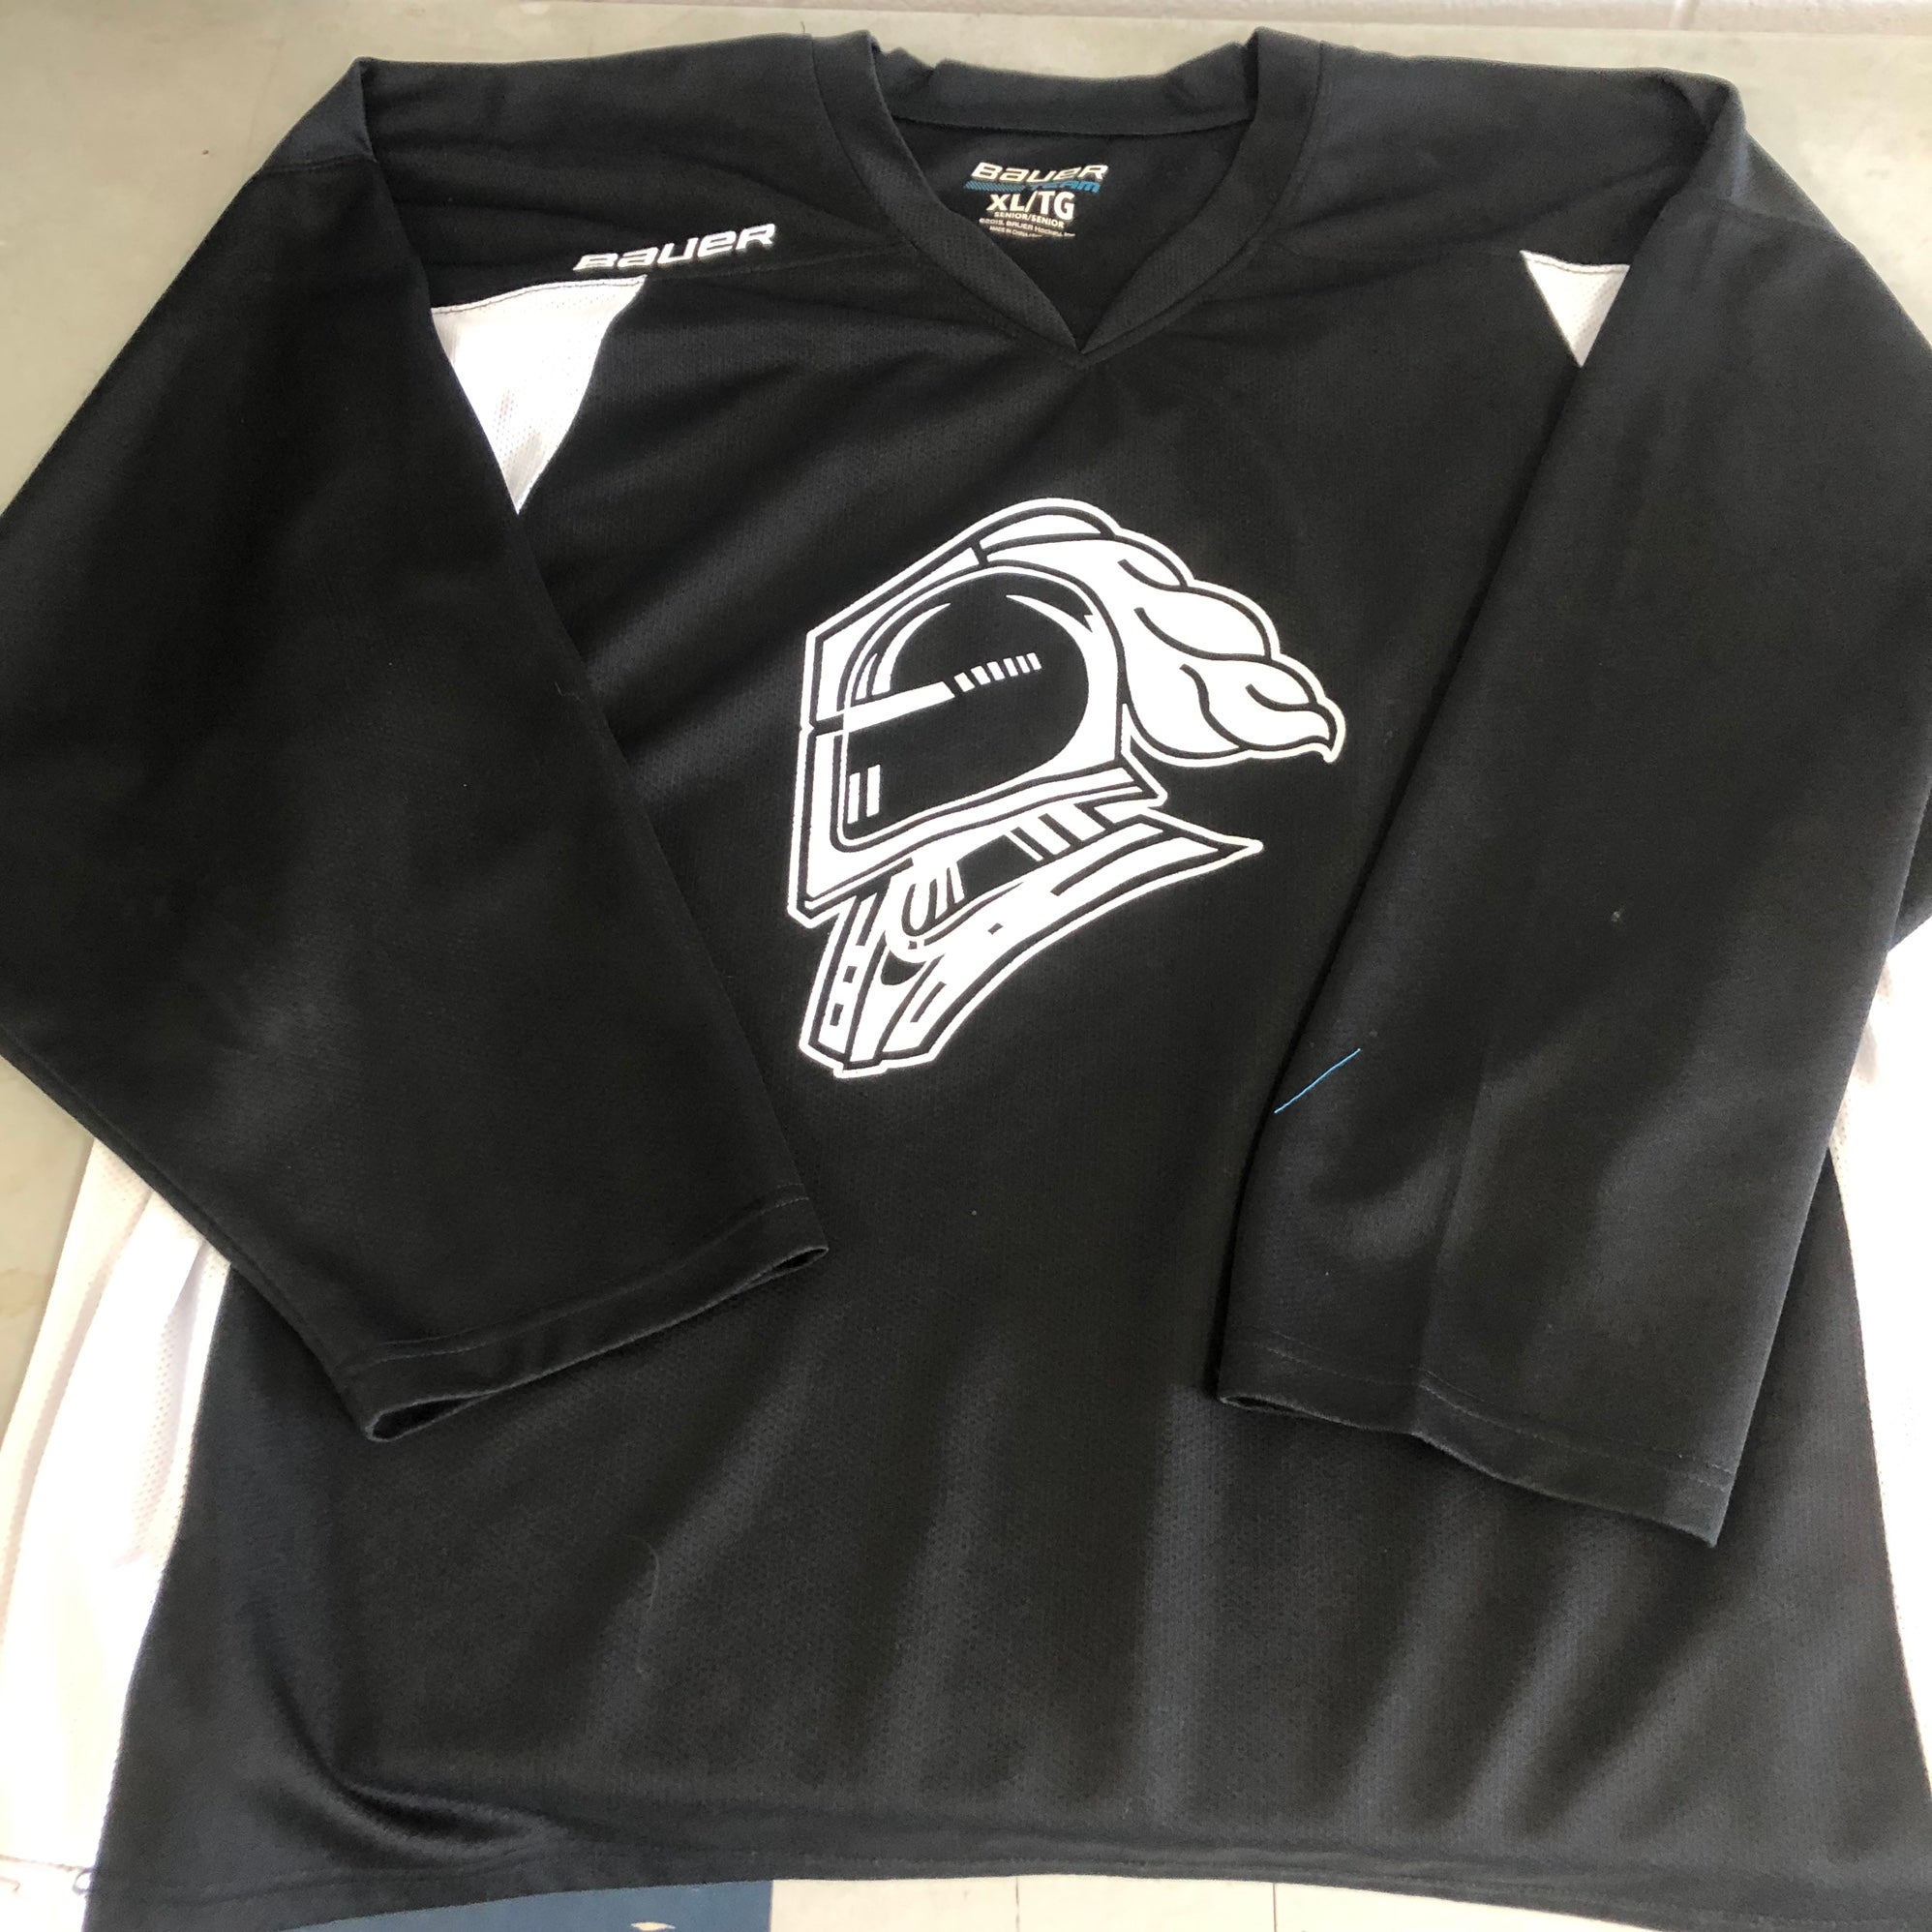 Reebok Authentic London Knights OHL Hockey Jersey Size Youth L/XL 